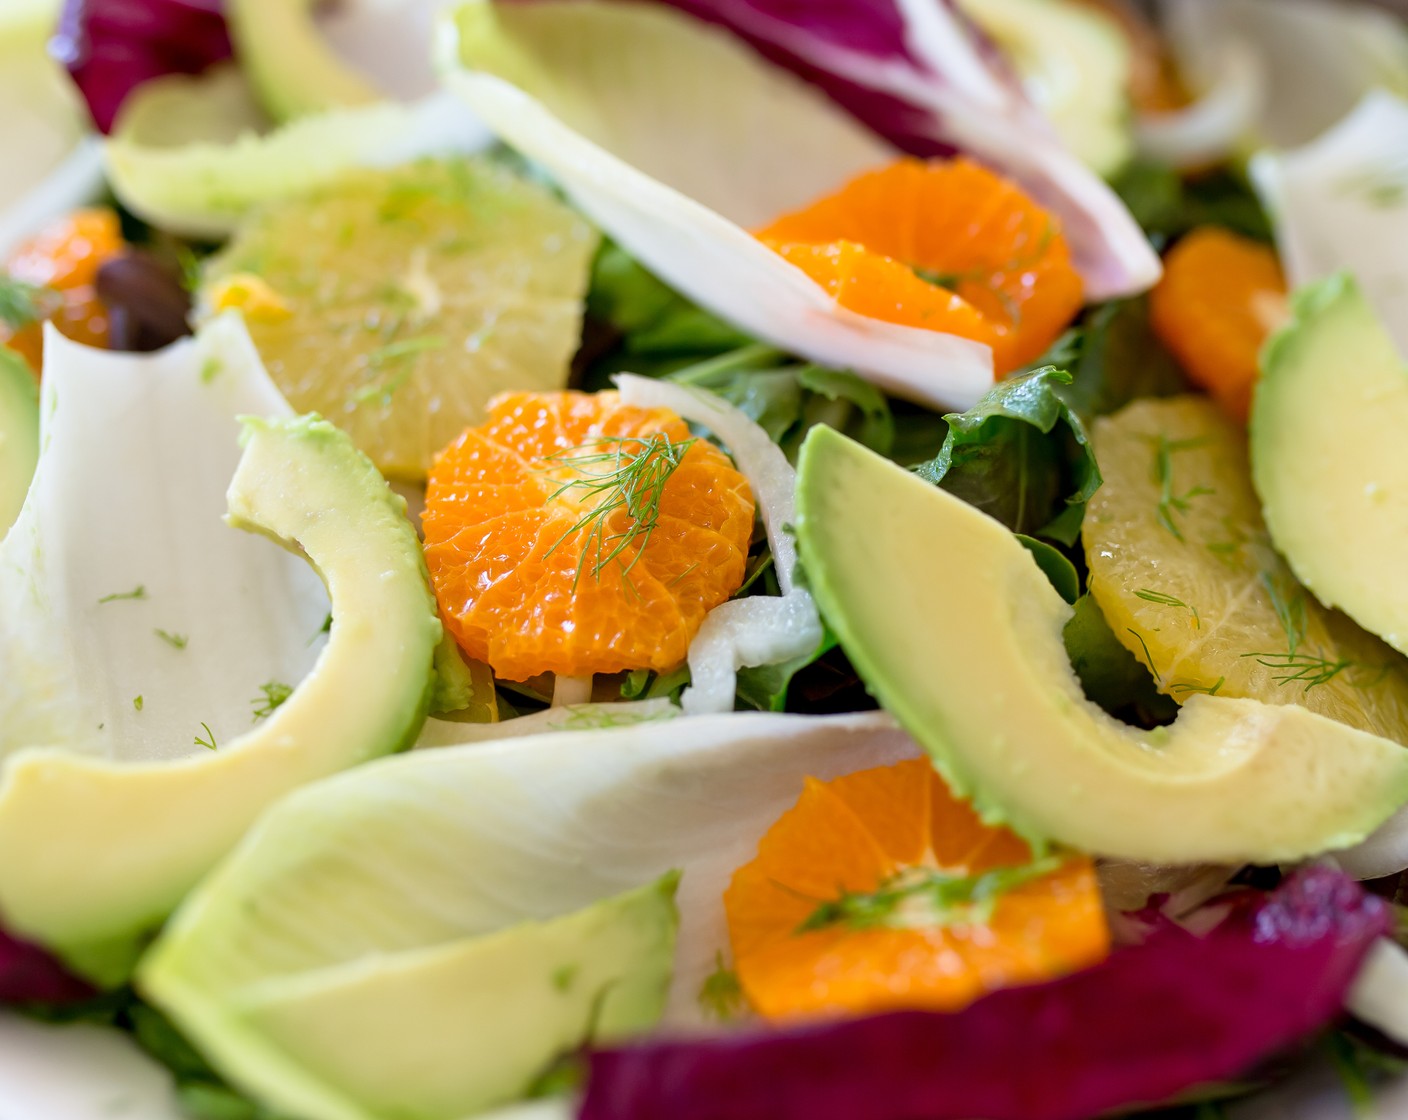 step 1 Assemble salad by adding Salad Greens (4 cups), Endive (1 cup), Radicchio (1 cup), Navel Orange (1), Mandarin Orange (1), Fennel Bulb (1 stalk), and Avocado (1) onto a platter.